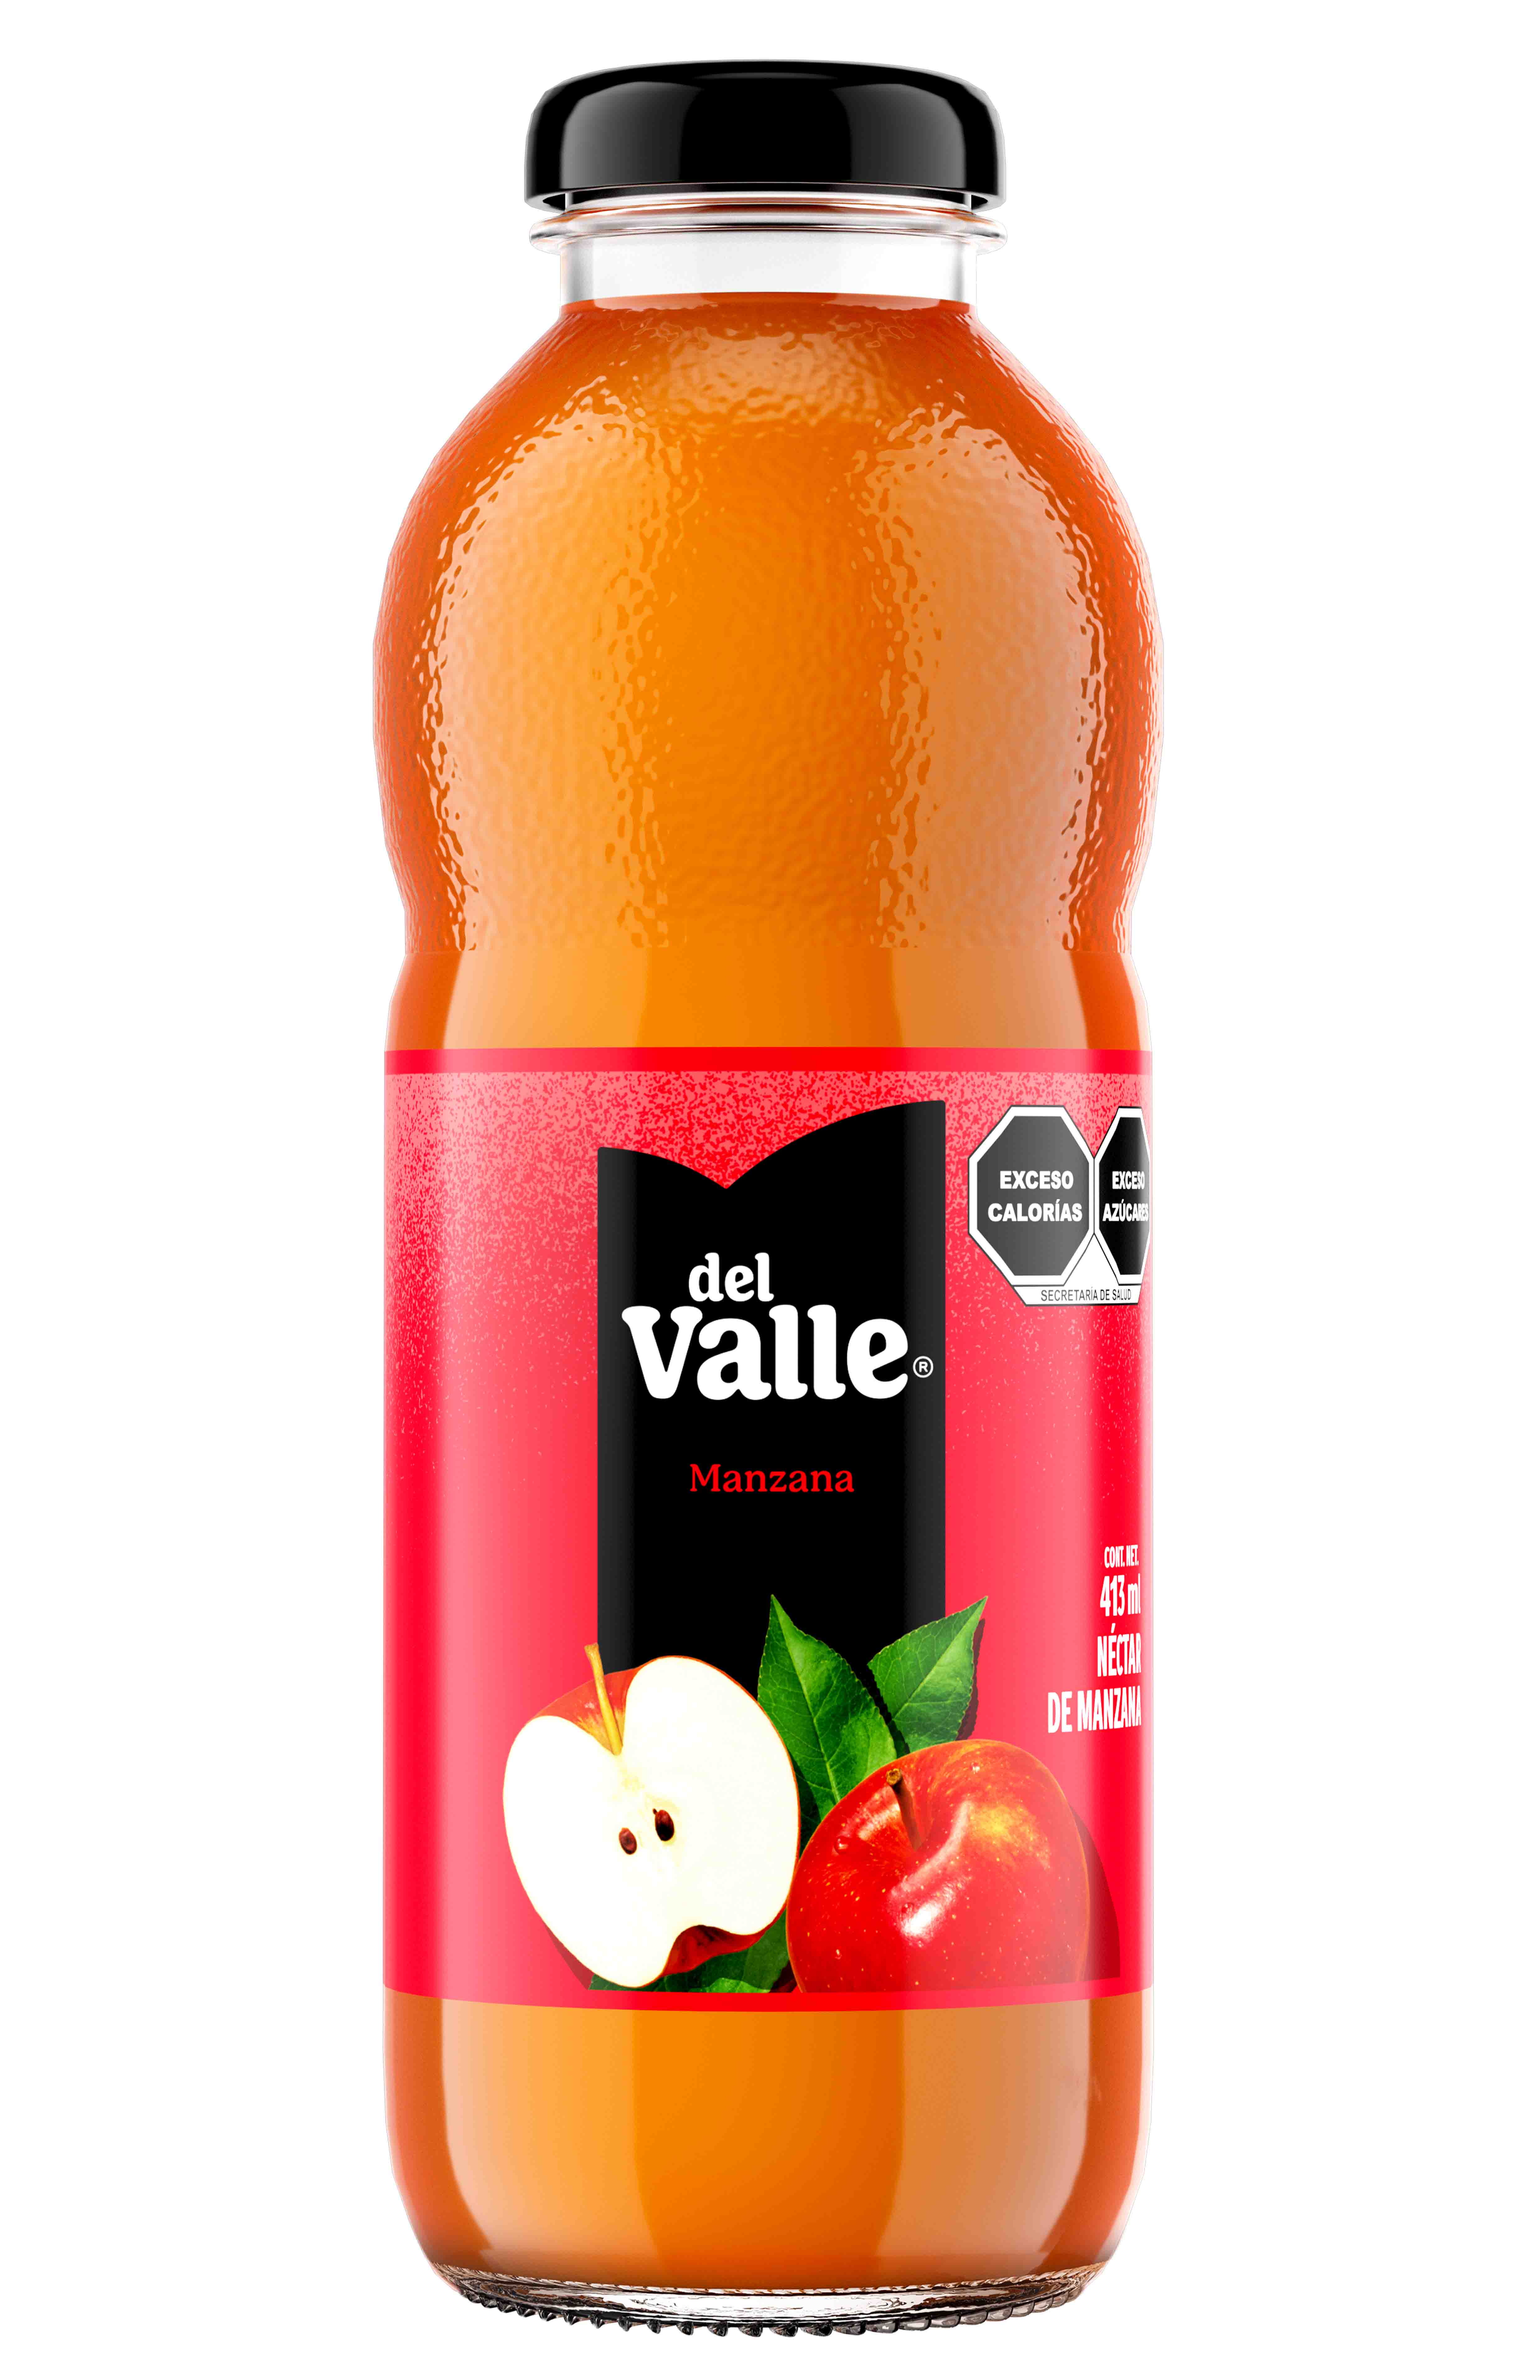 Botella de Fanta sabor Naranja